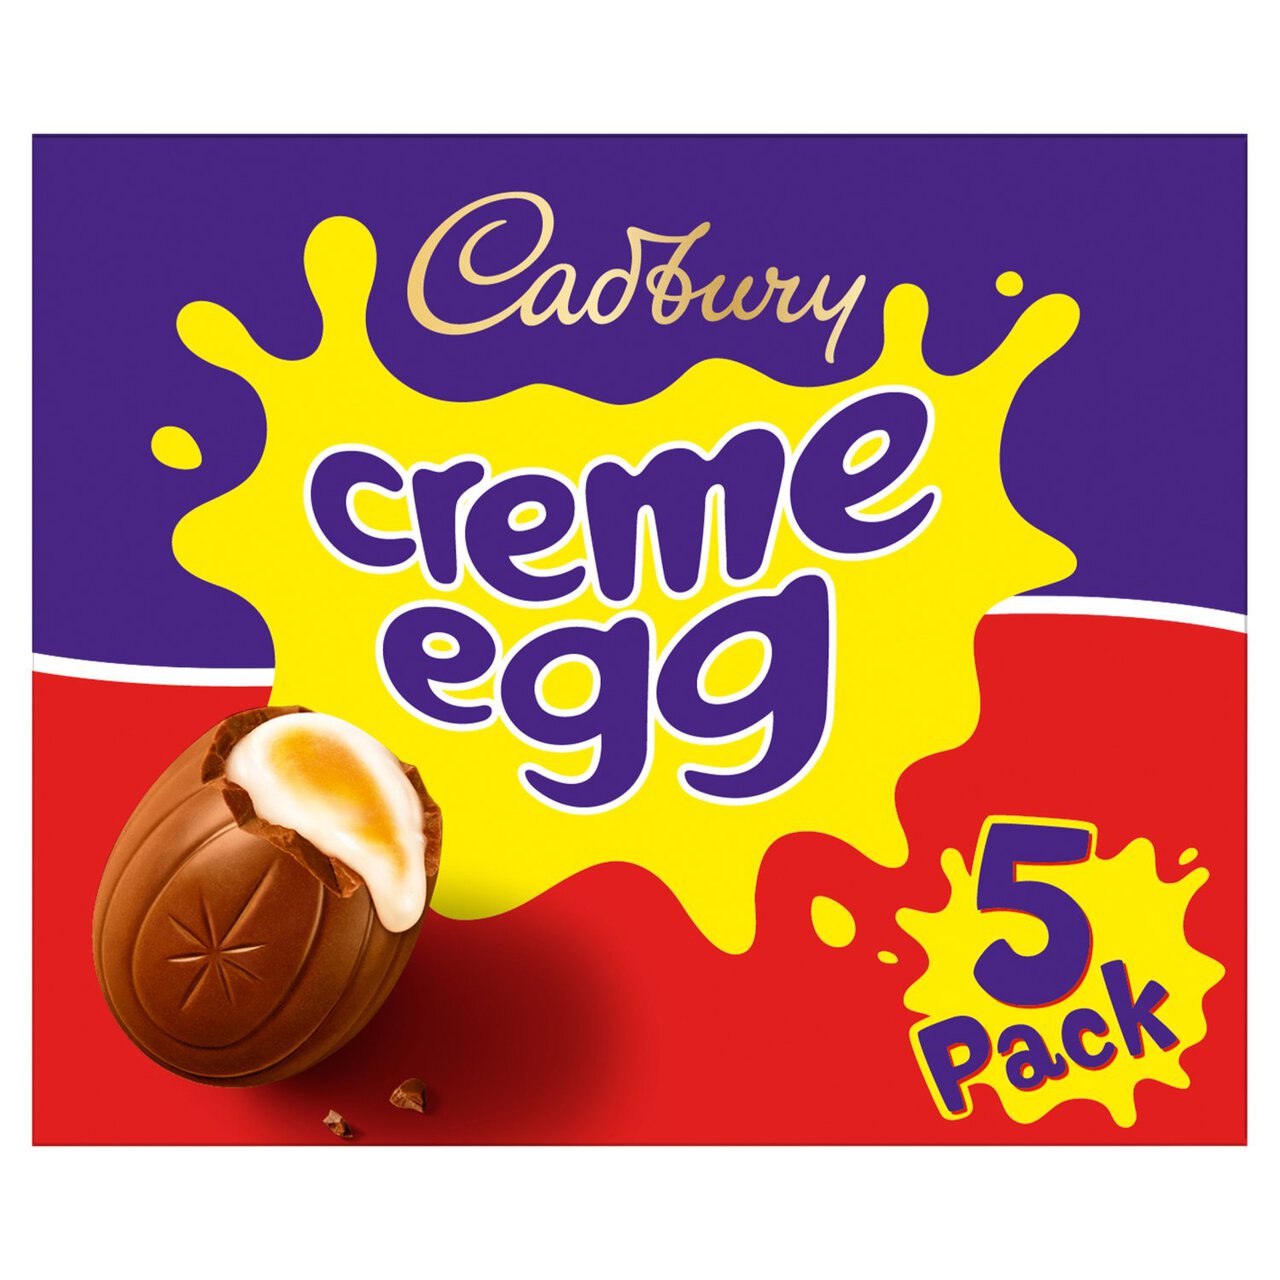 Cadbury 5 Creme Eggs 197g